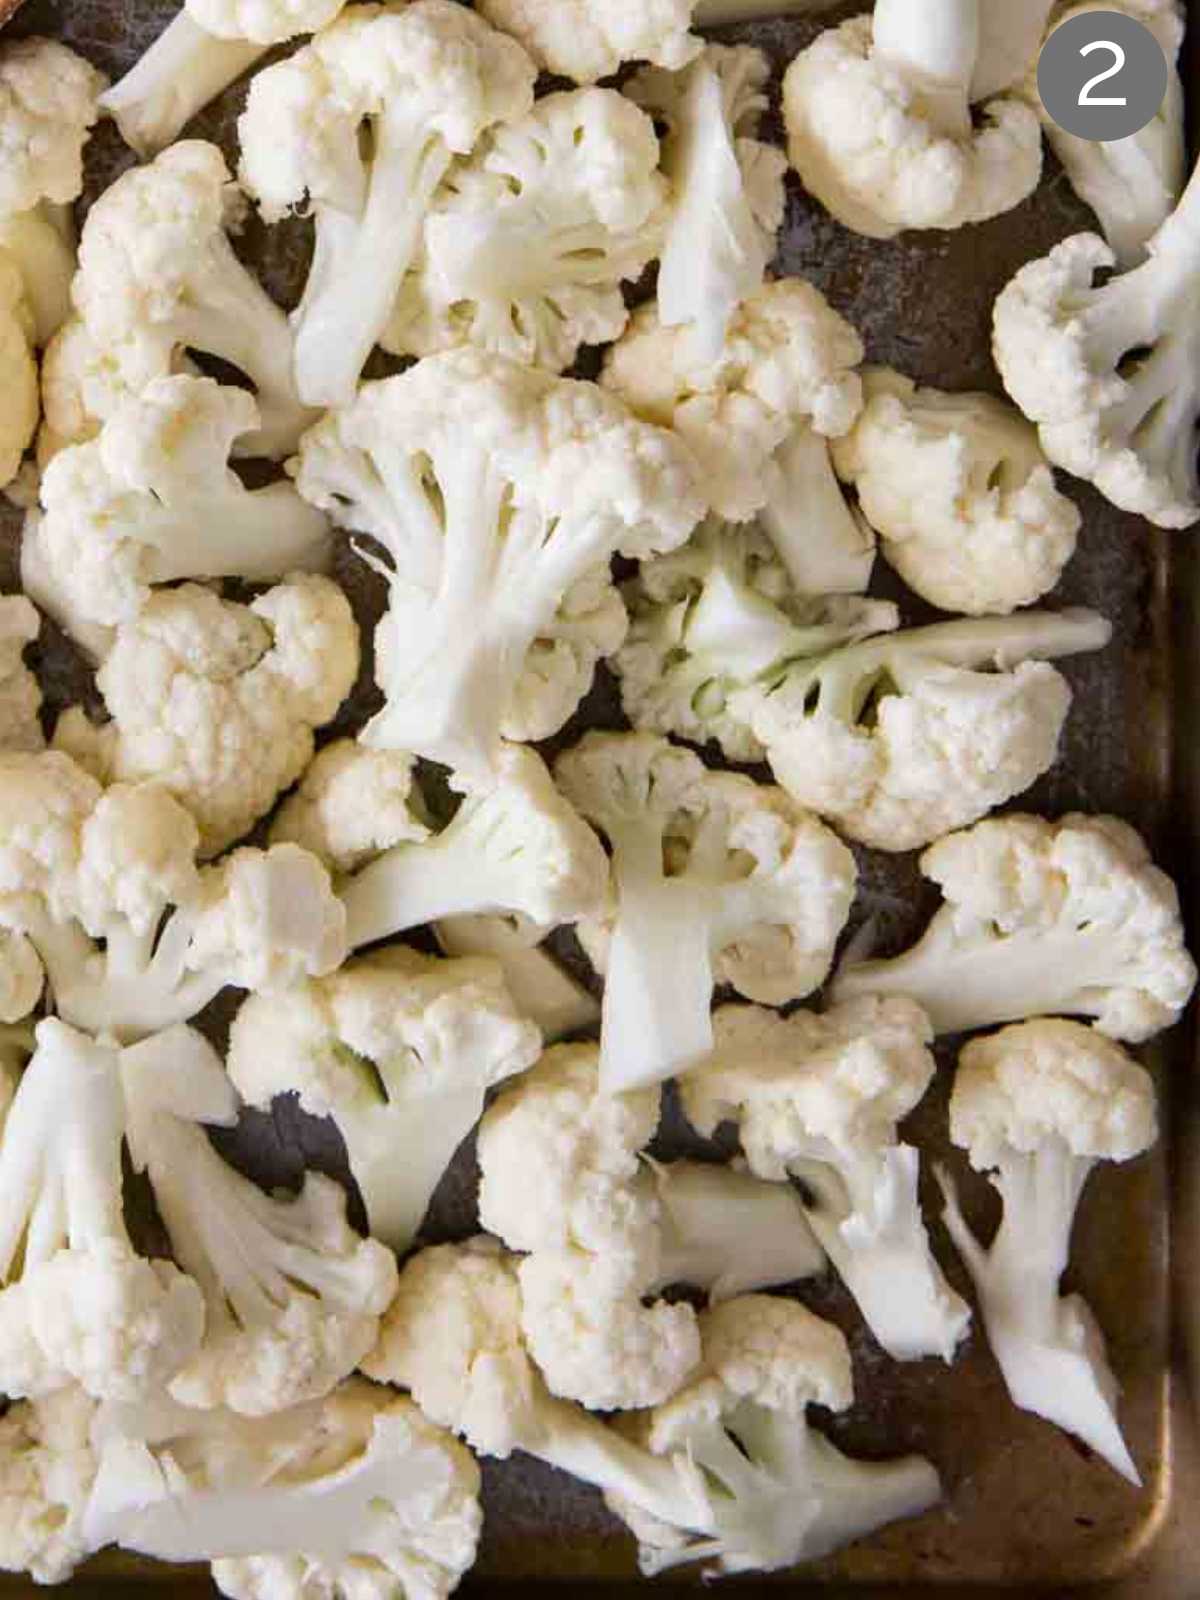 Cauliflower florets spread on a flat surface.